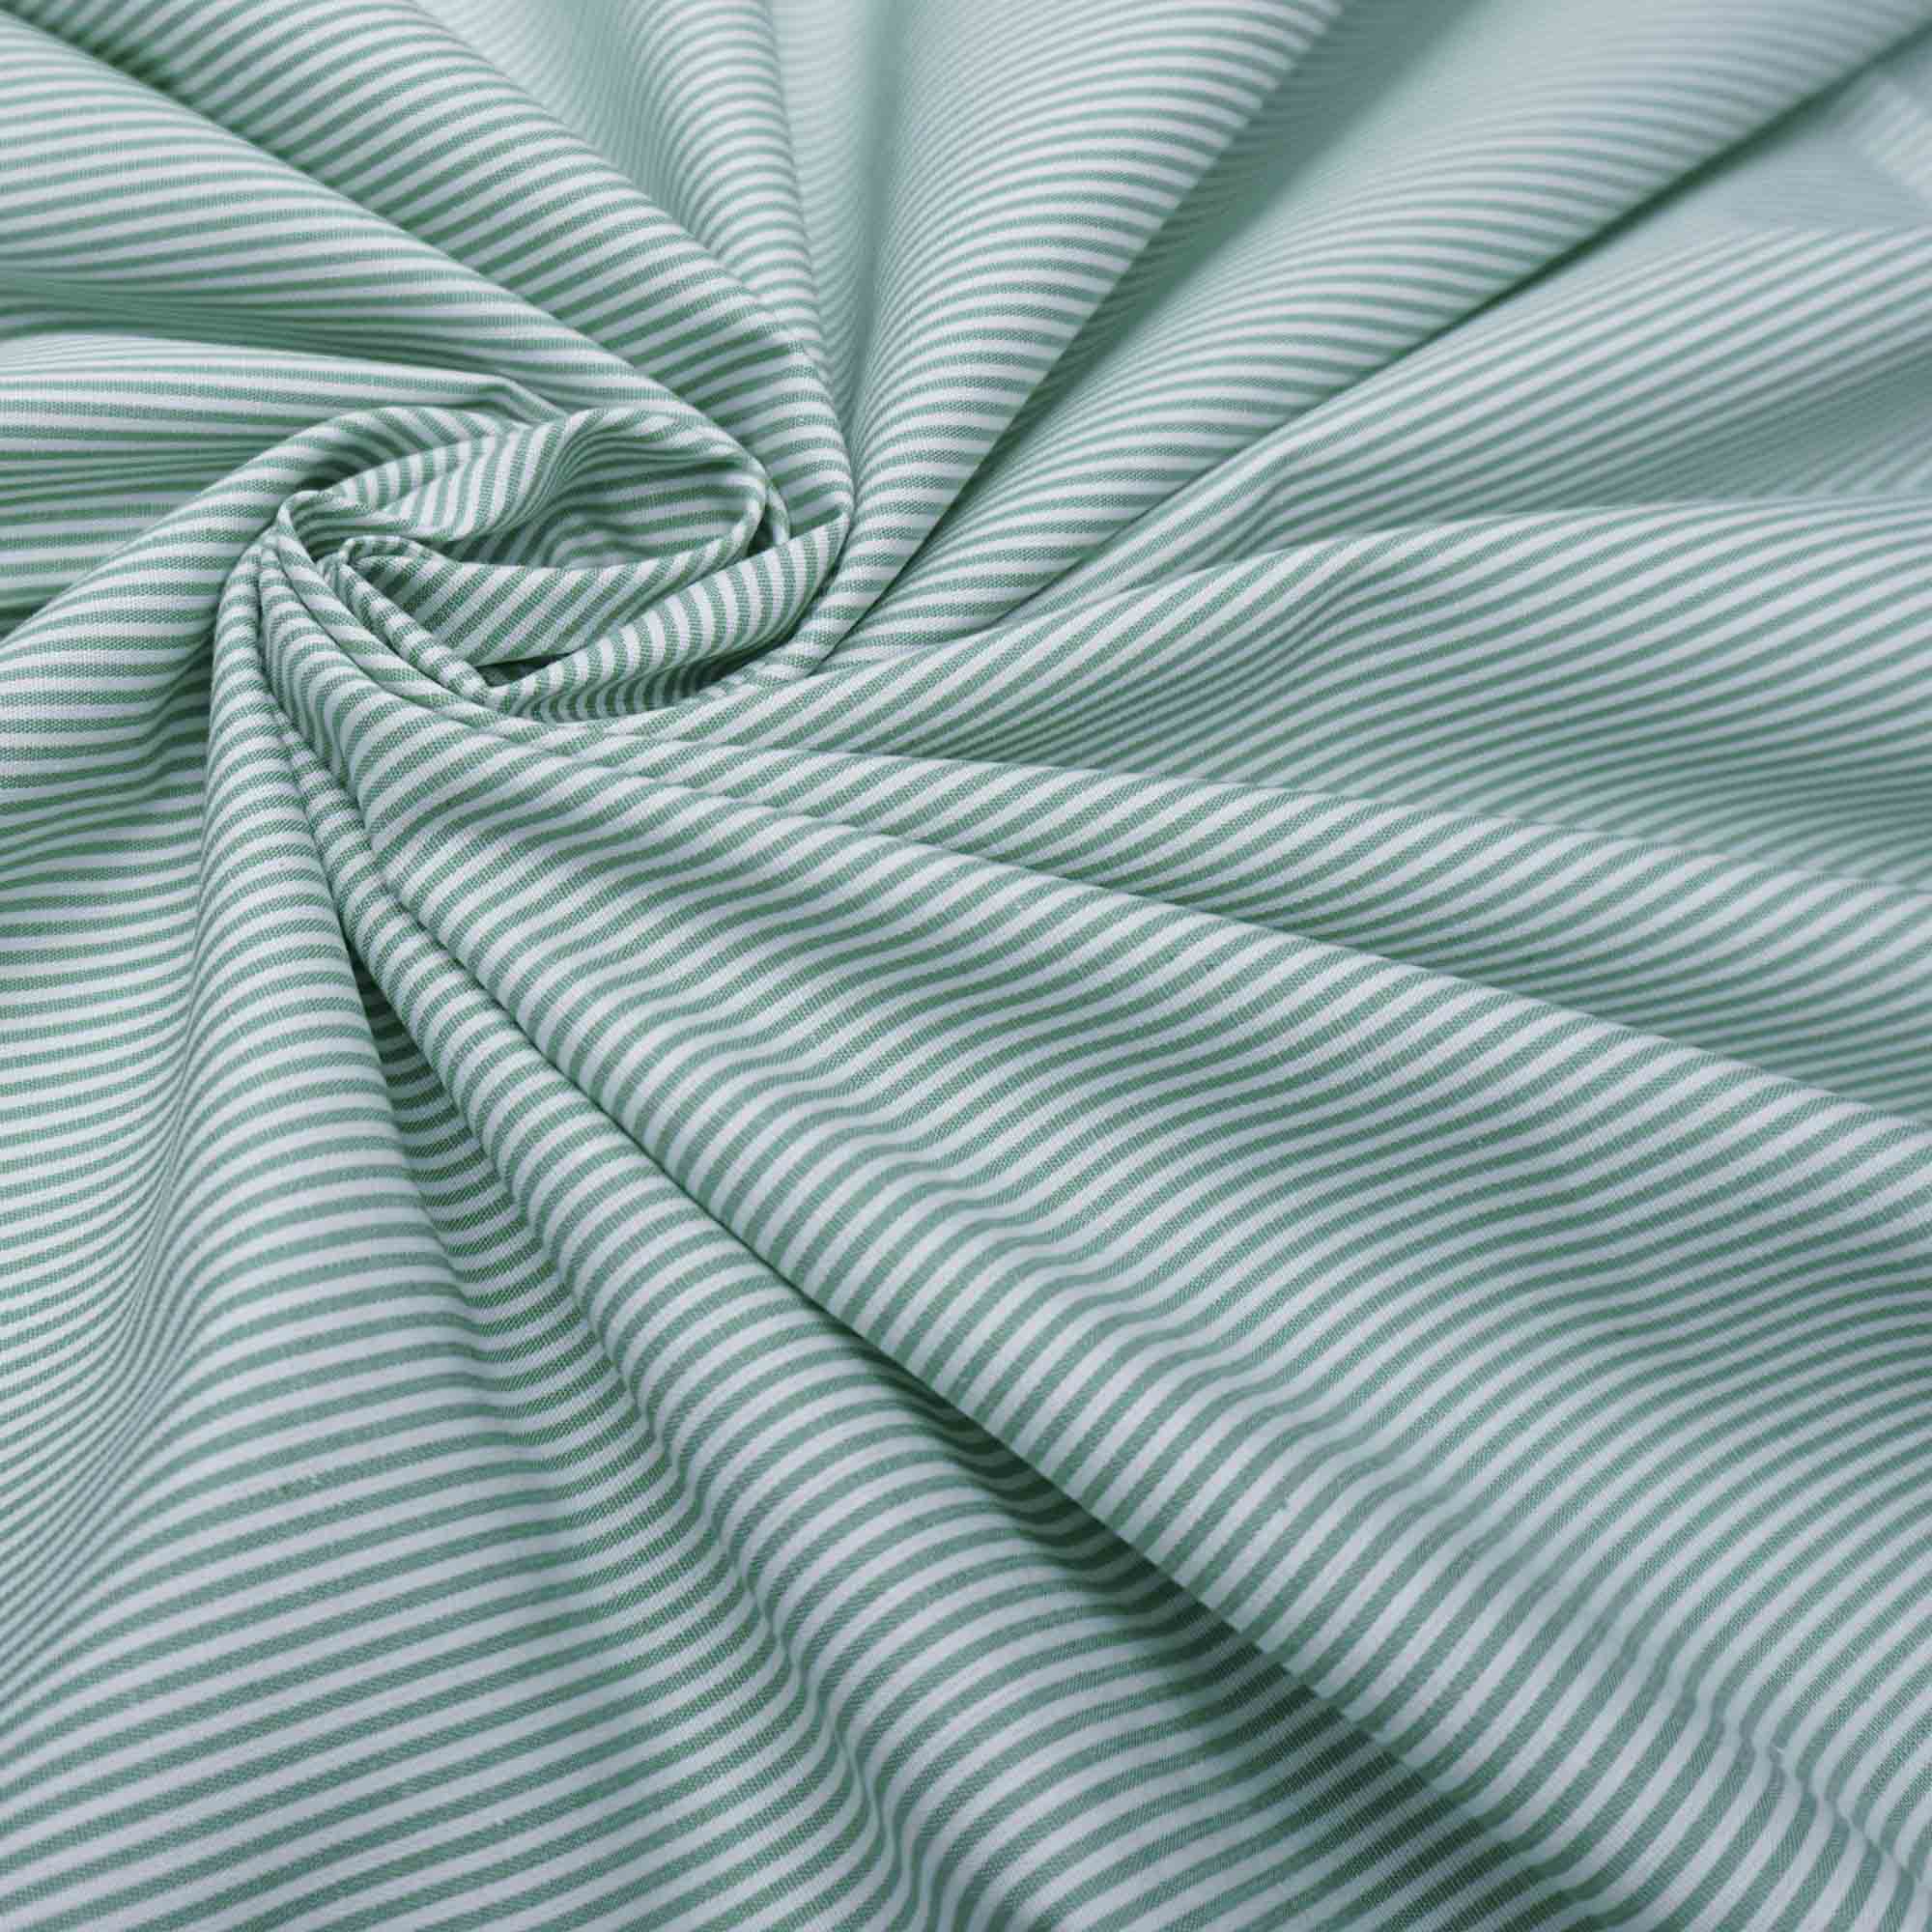 Tecido tricoline estampado listrado verde/branco